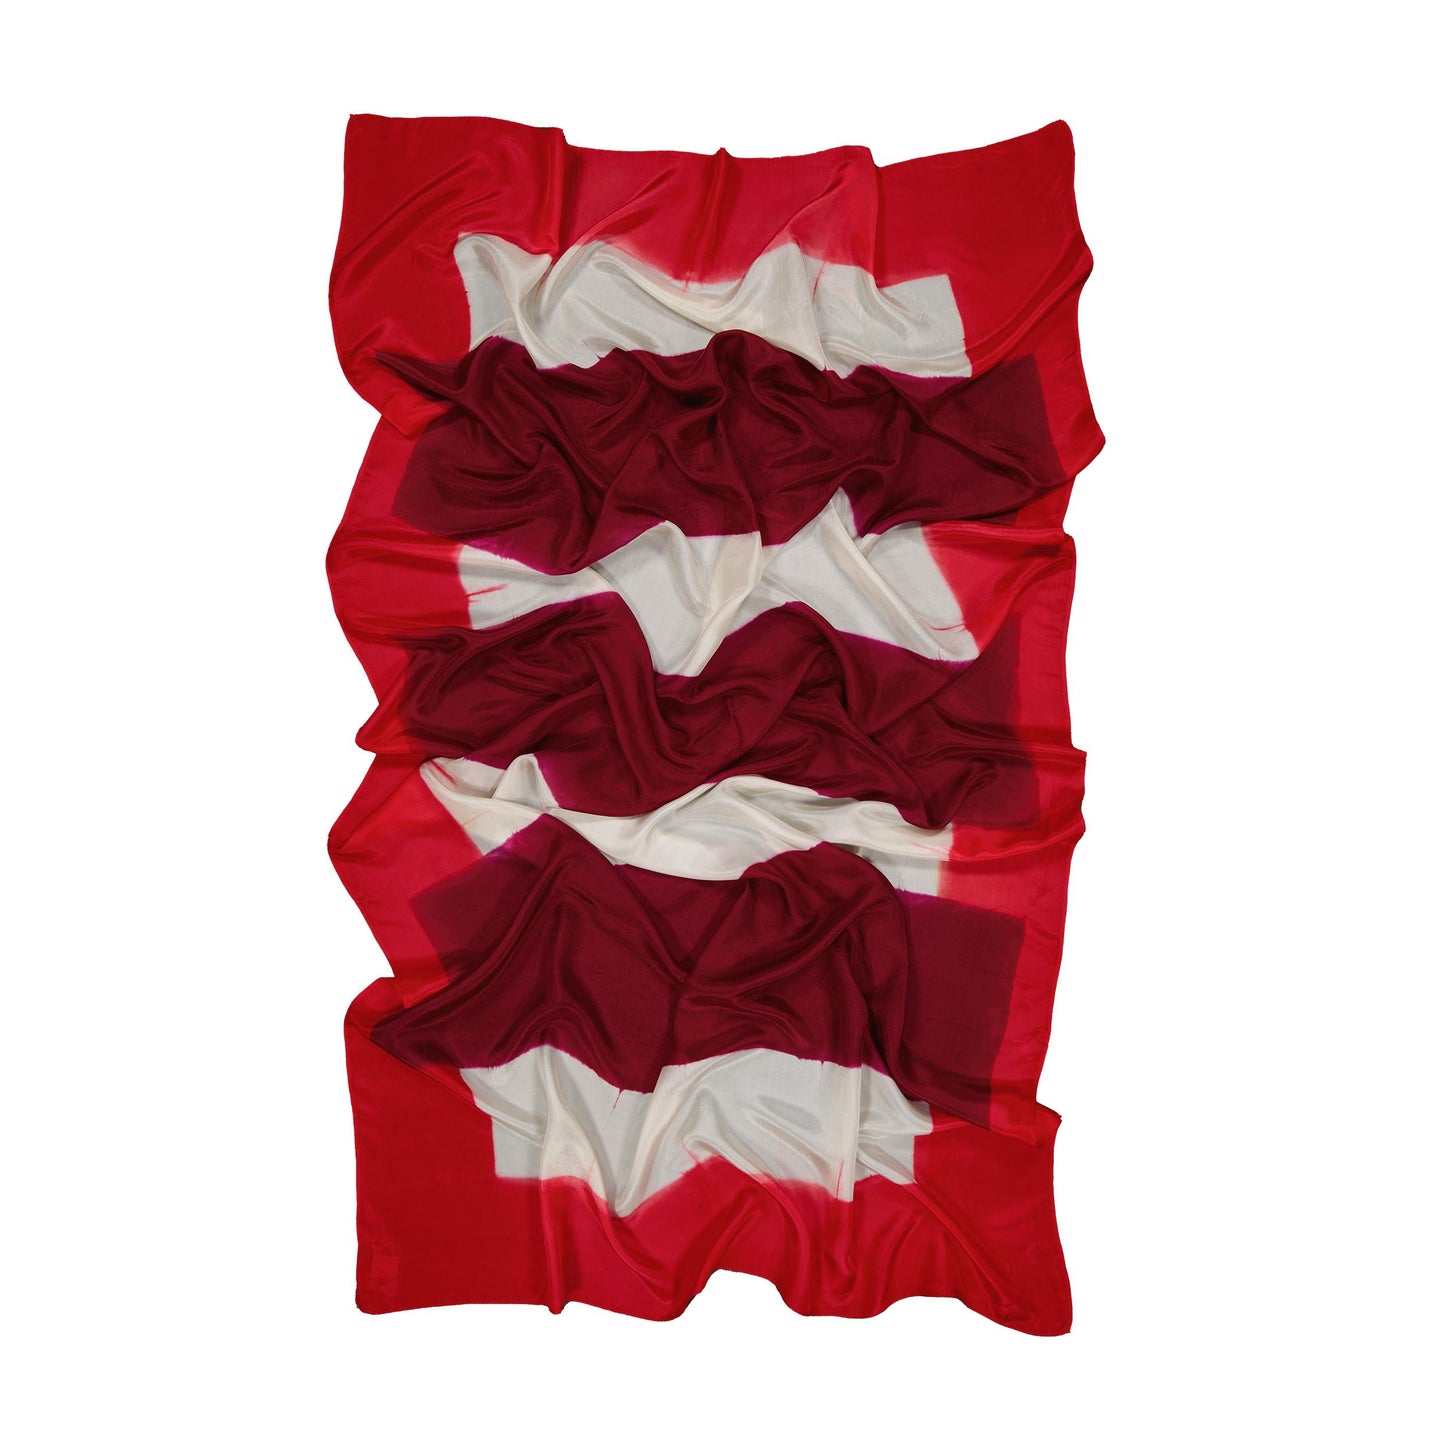 LIGNES - silk scarf RED & GARNET